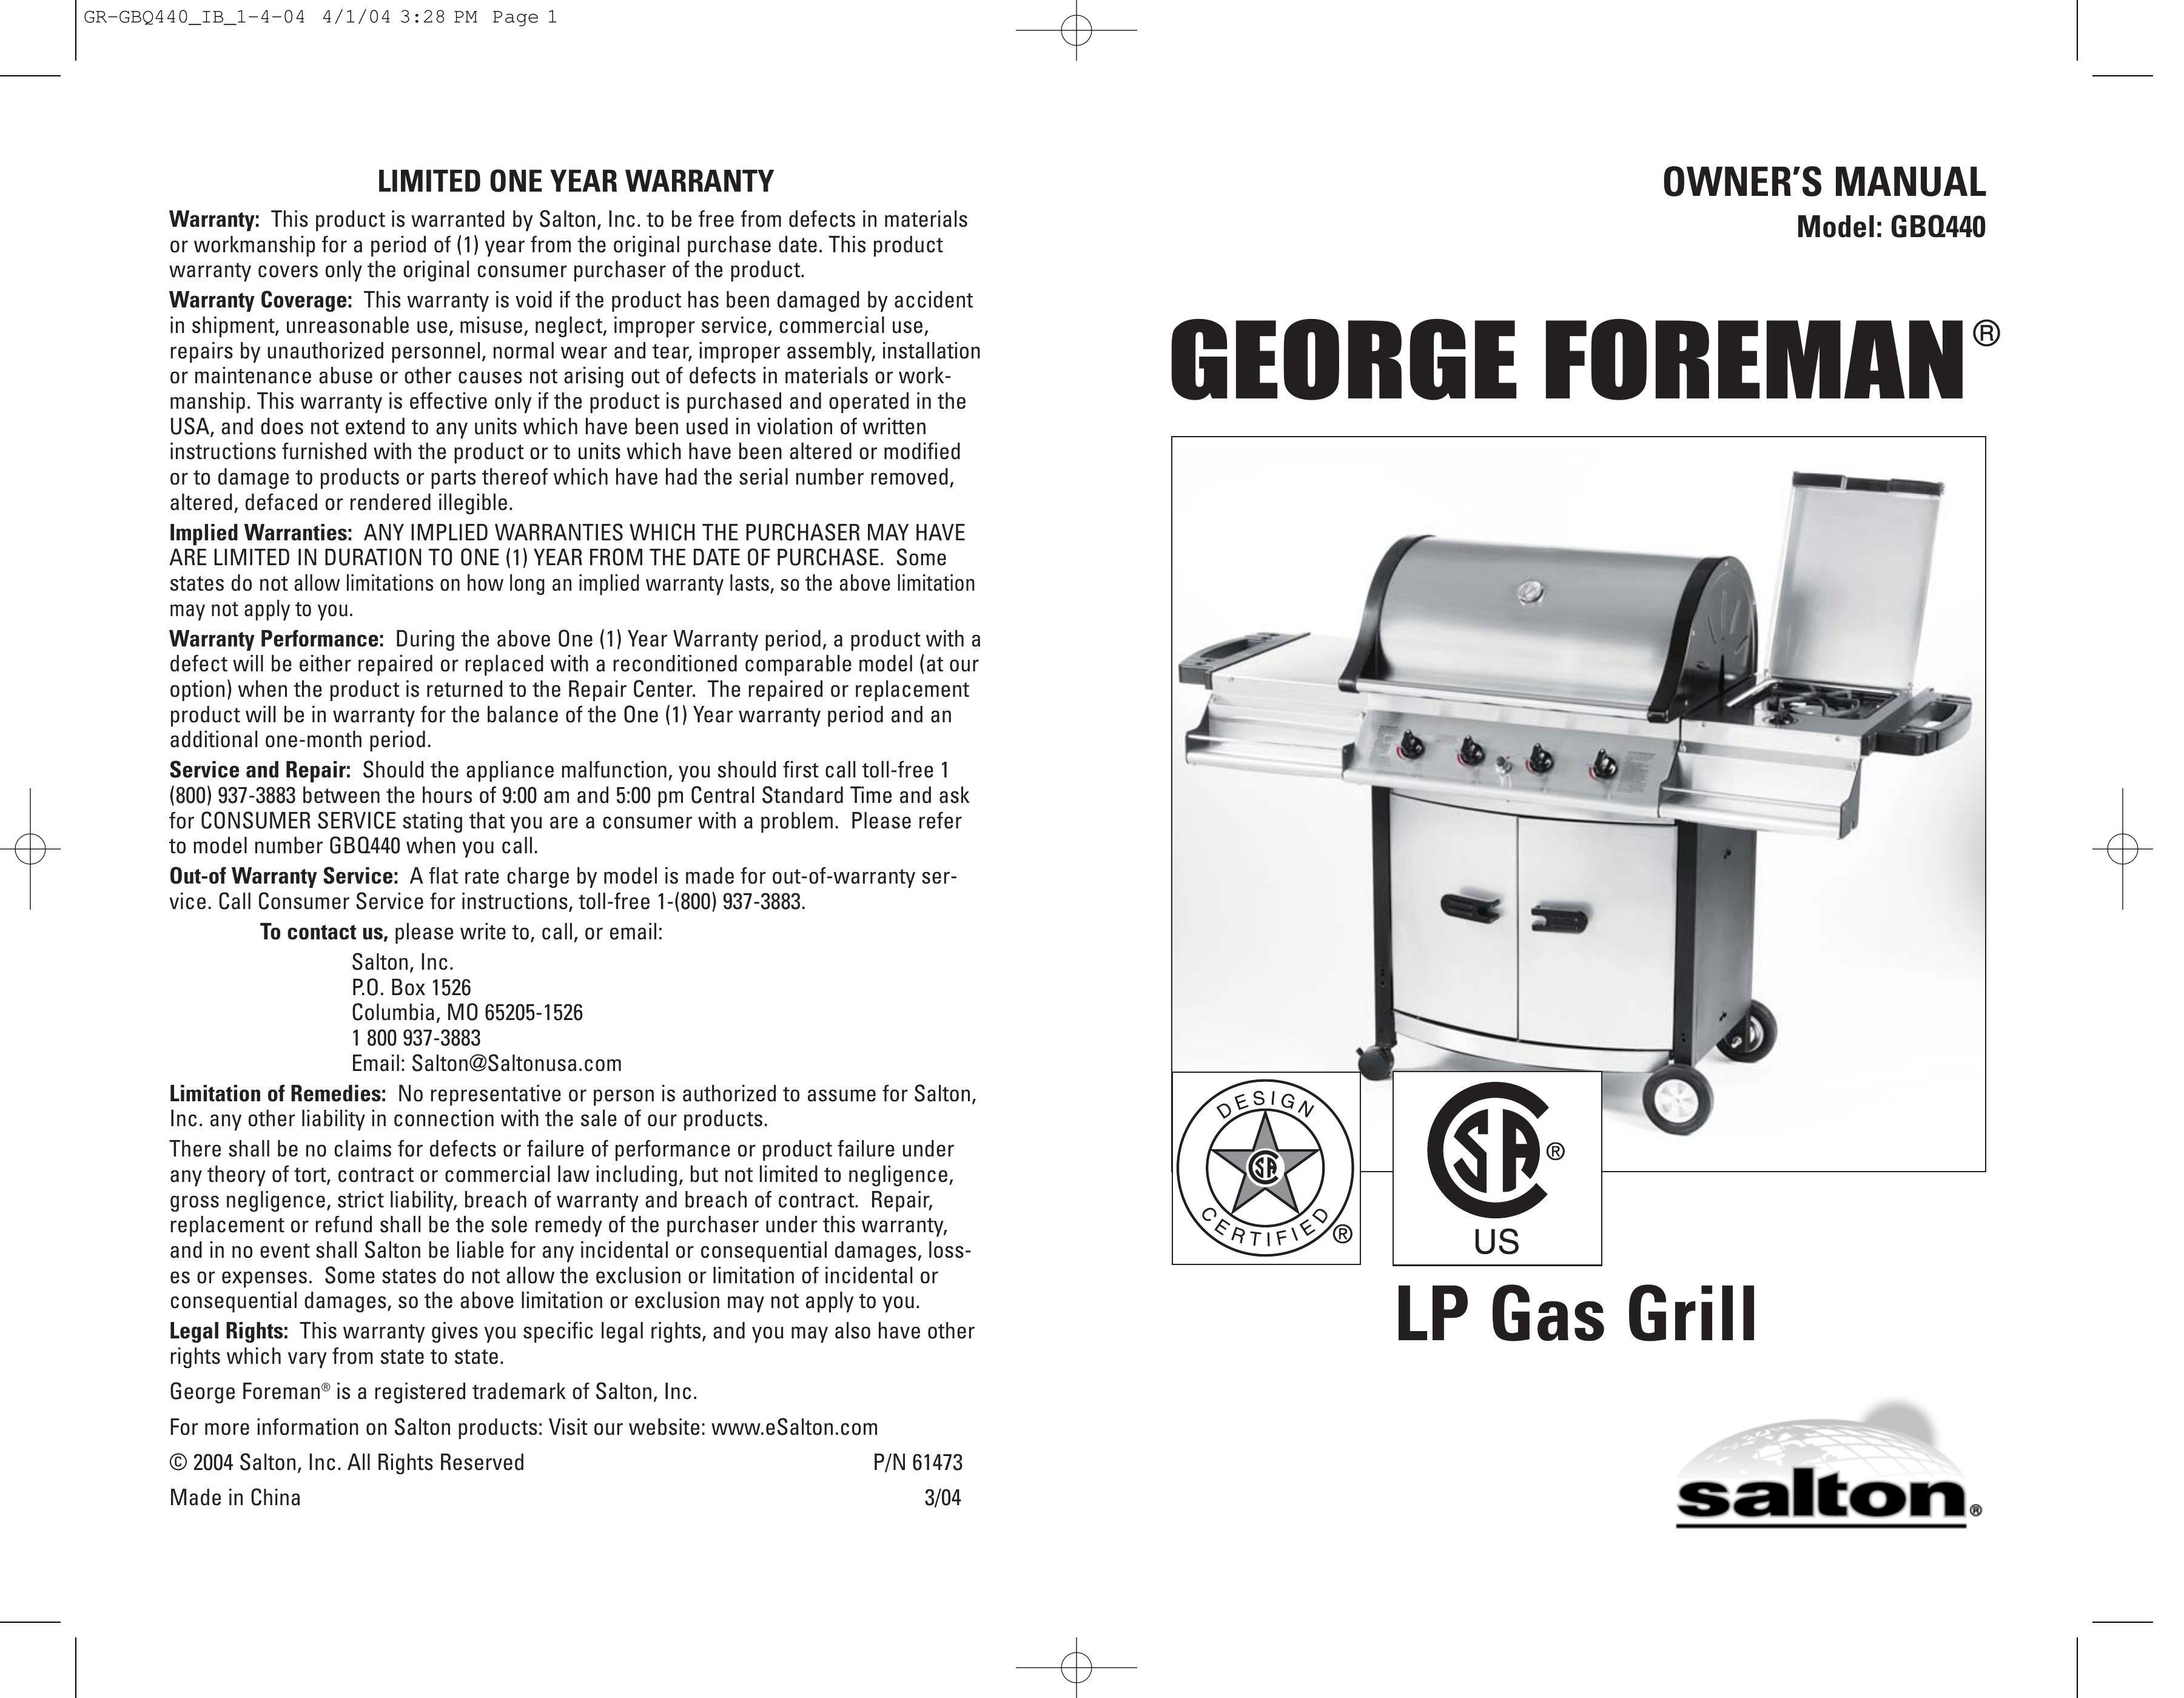 George Foreman GBQ440 Gas Grill User Manual